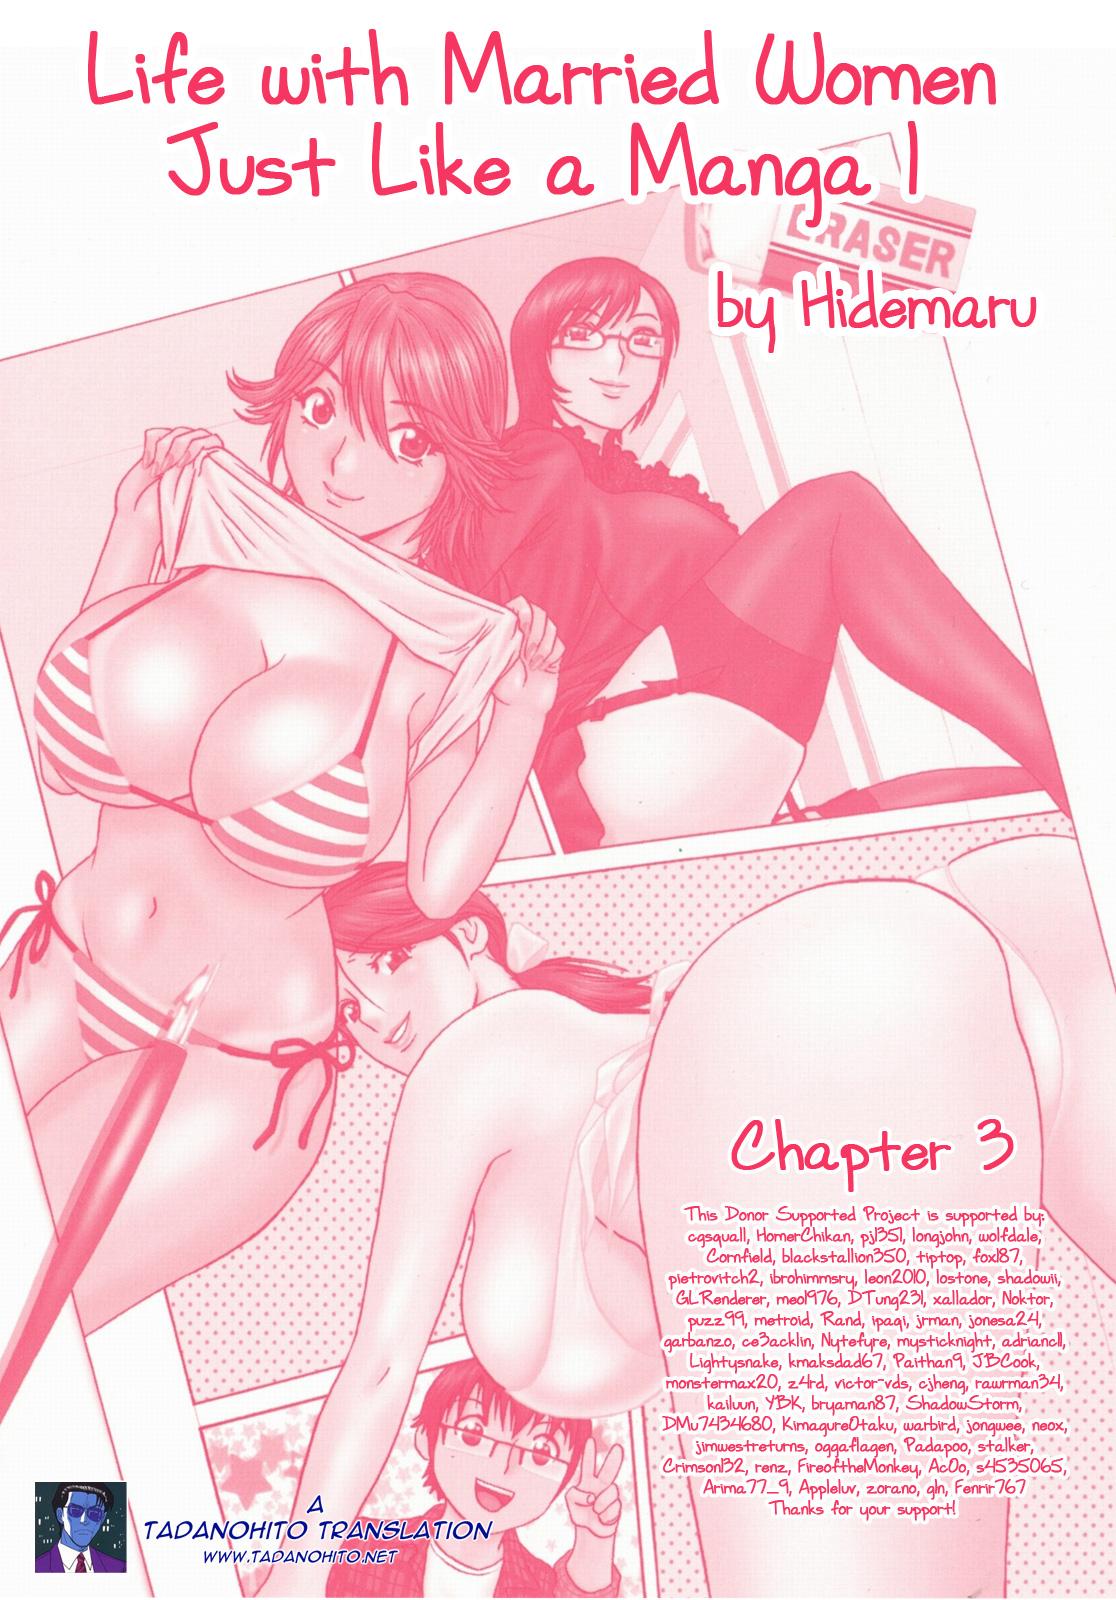 [Hidemaru] Life with Married Women Just Like a Manga 1 - Ch. 1-3 [English] {Tadanohito} 63